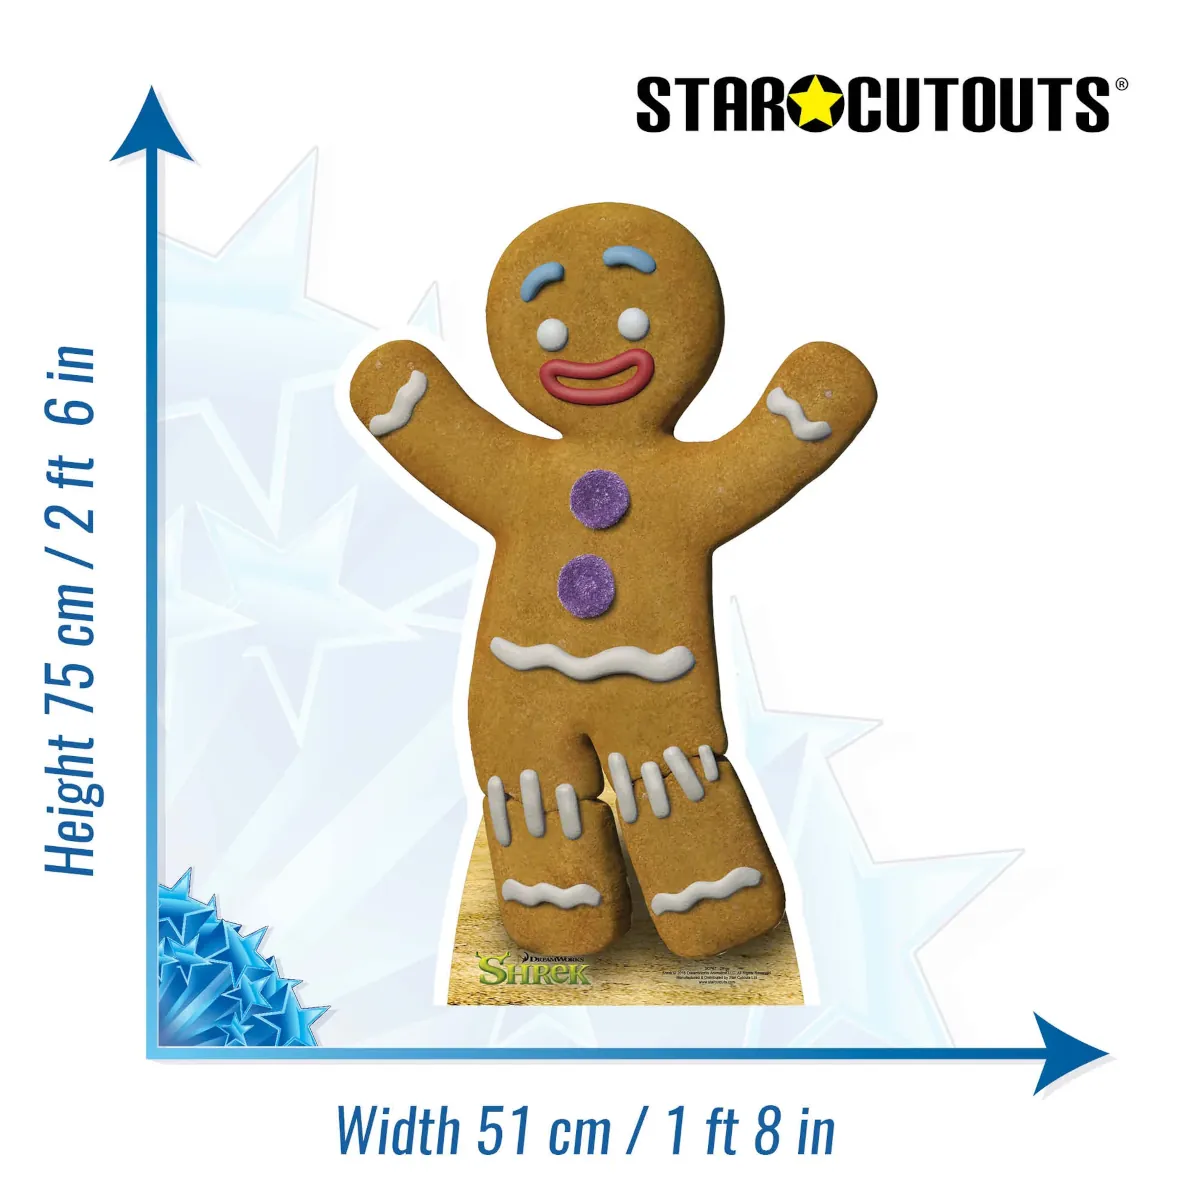 SC787 Gingy 'The Gingerbread Man' (DreamWorks Animation Shrek) Mini Cardboard Cutout Standee Size